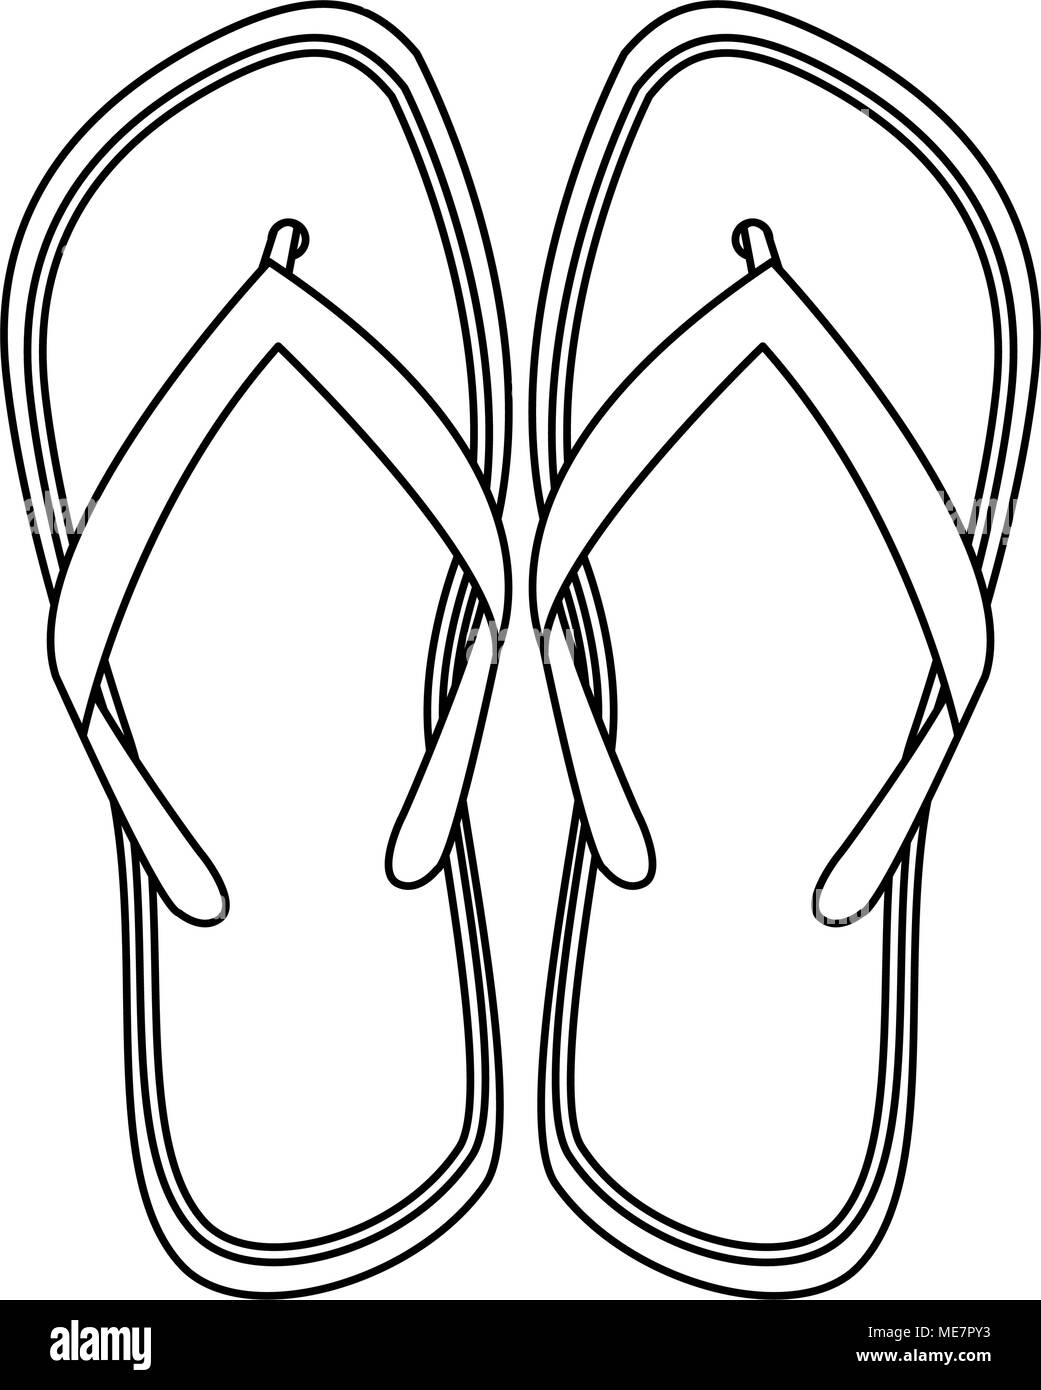 Flip Flops Sandals On Black And White Stock Vector Image Art Alamy